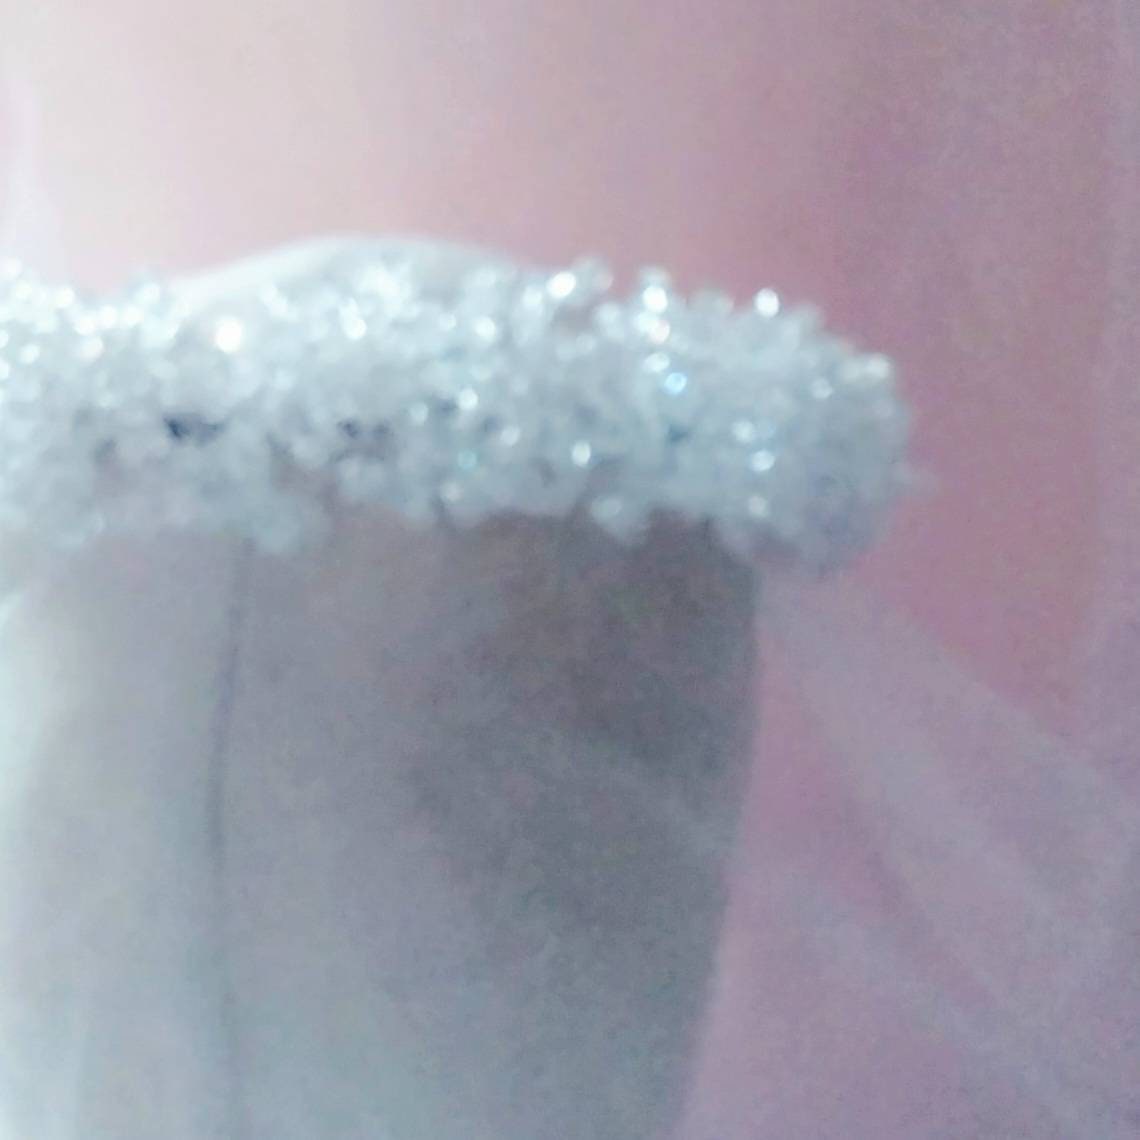 NEIGER headband frozen snowfla bridal headpiece flowers hair accessories silver white bling tiaras crown Australia headpieces snow millinery